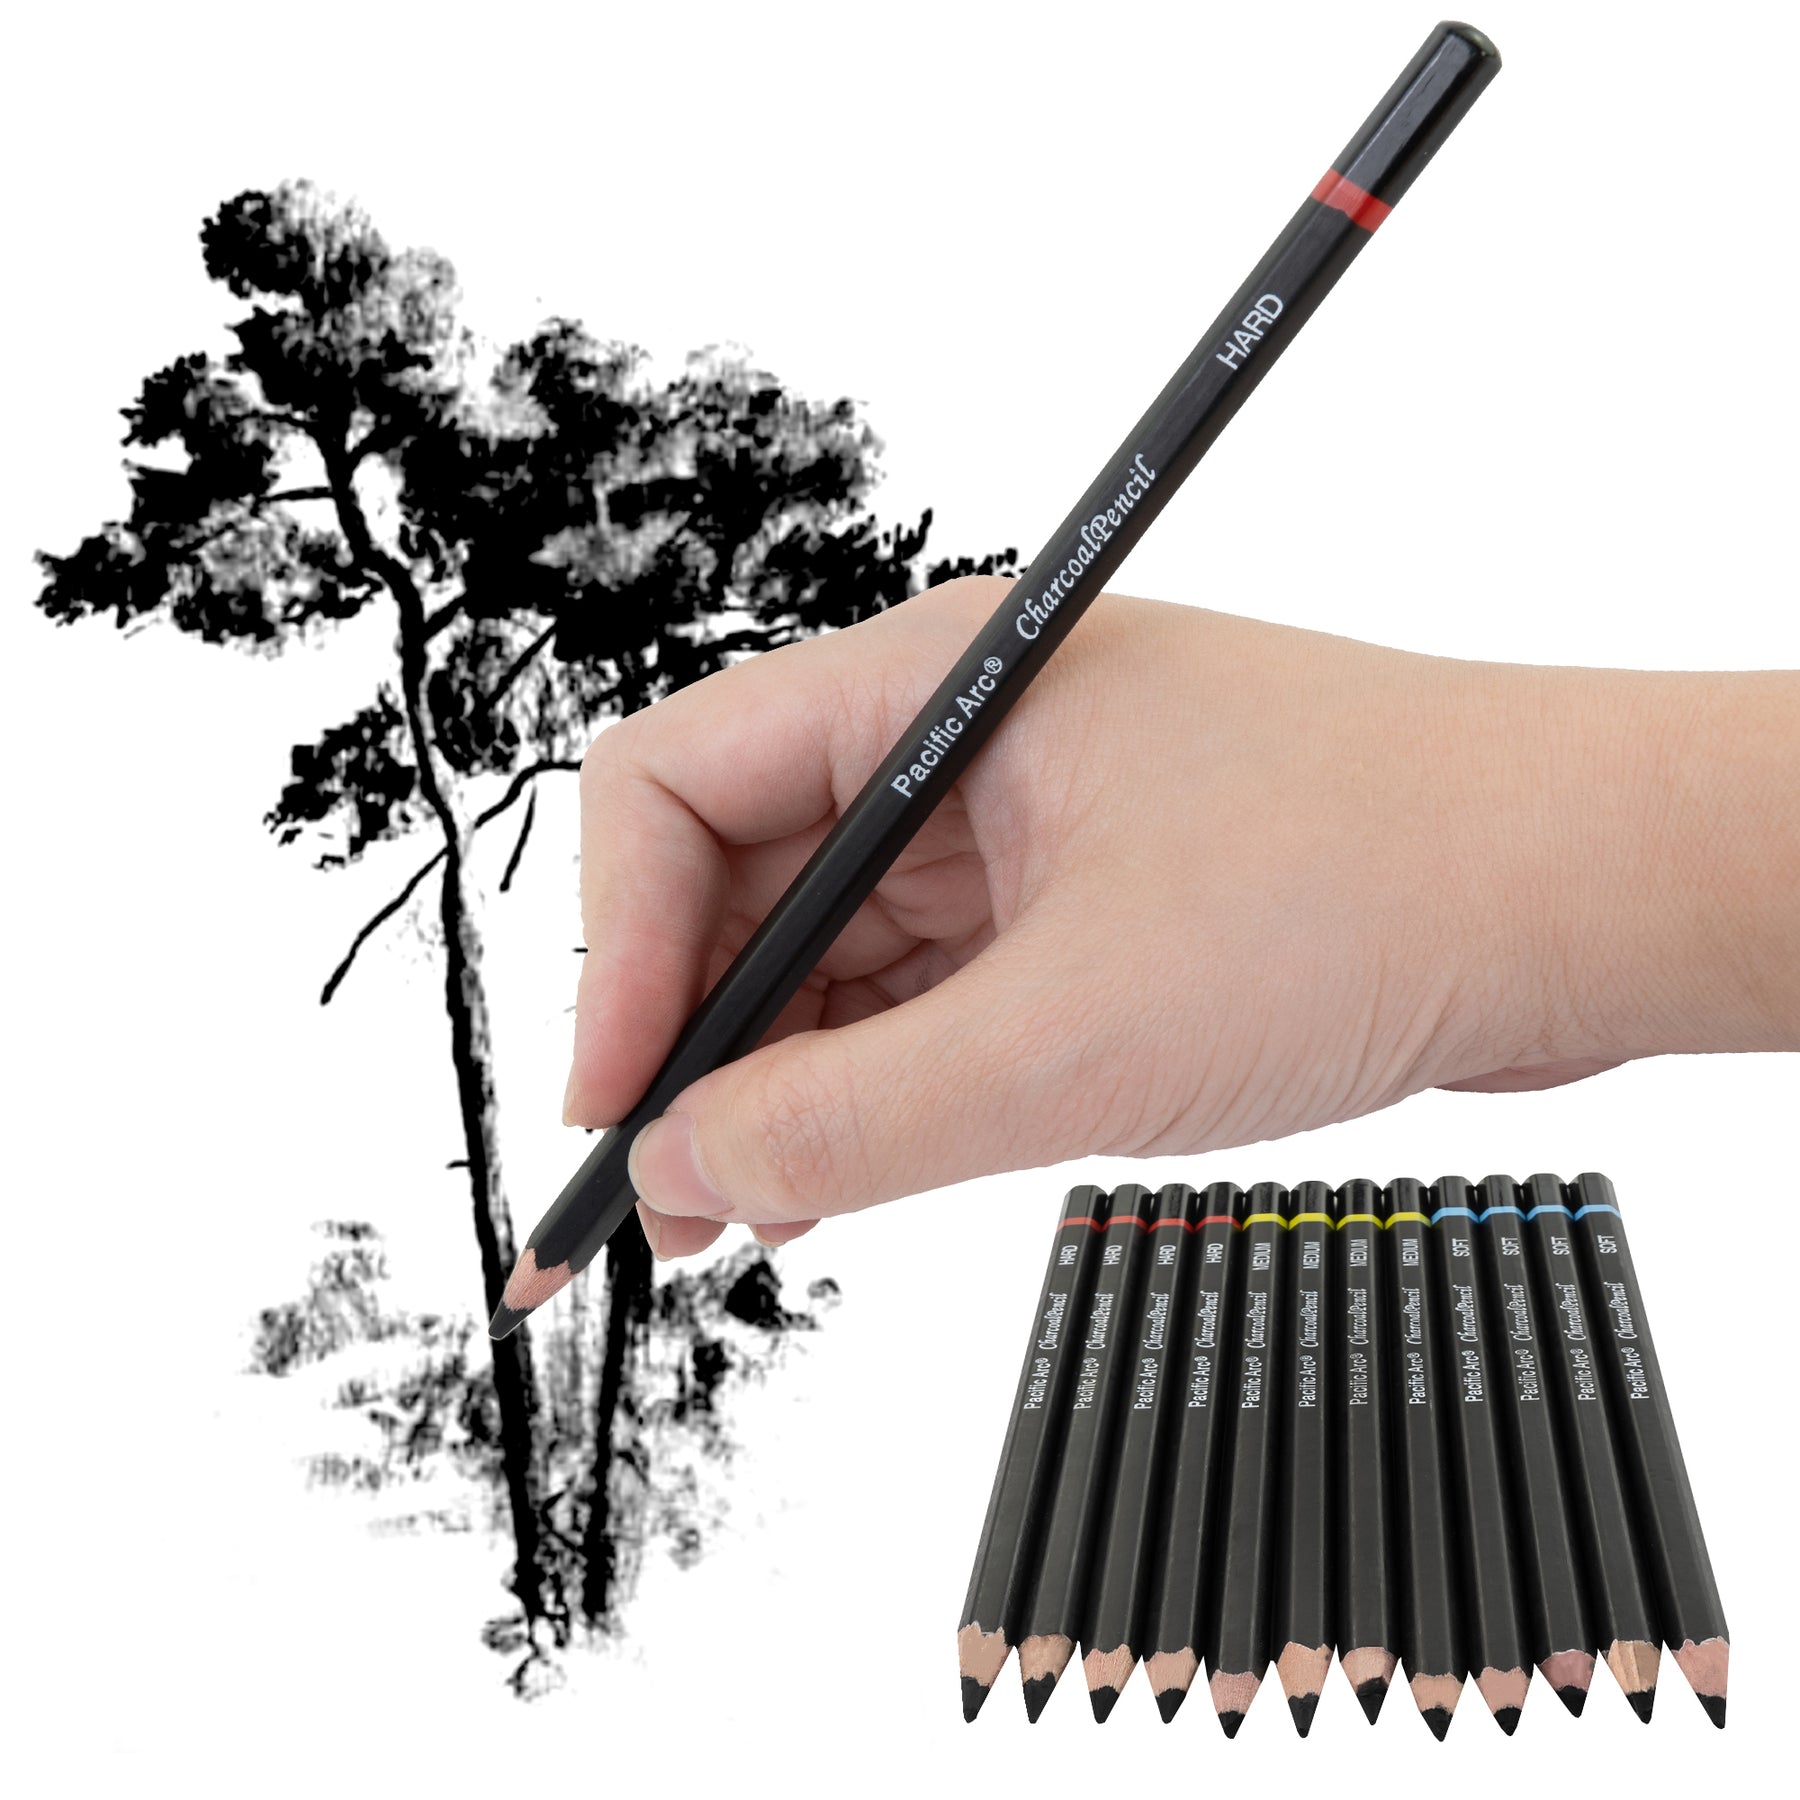 SKINPLUS Eyeshadow Blending Pencil Brush, Black - Price in India, Buy  SKINPLUS Eyeshadow Blending Pencil Brush, Black Online In India, Reviews,  Ratings & Features | Flipkart.com